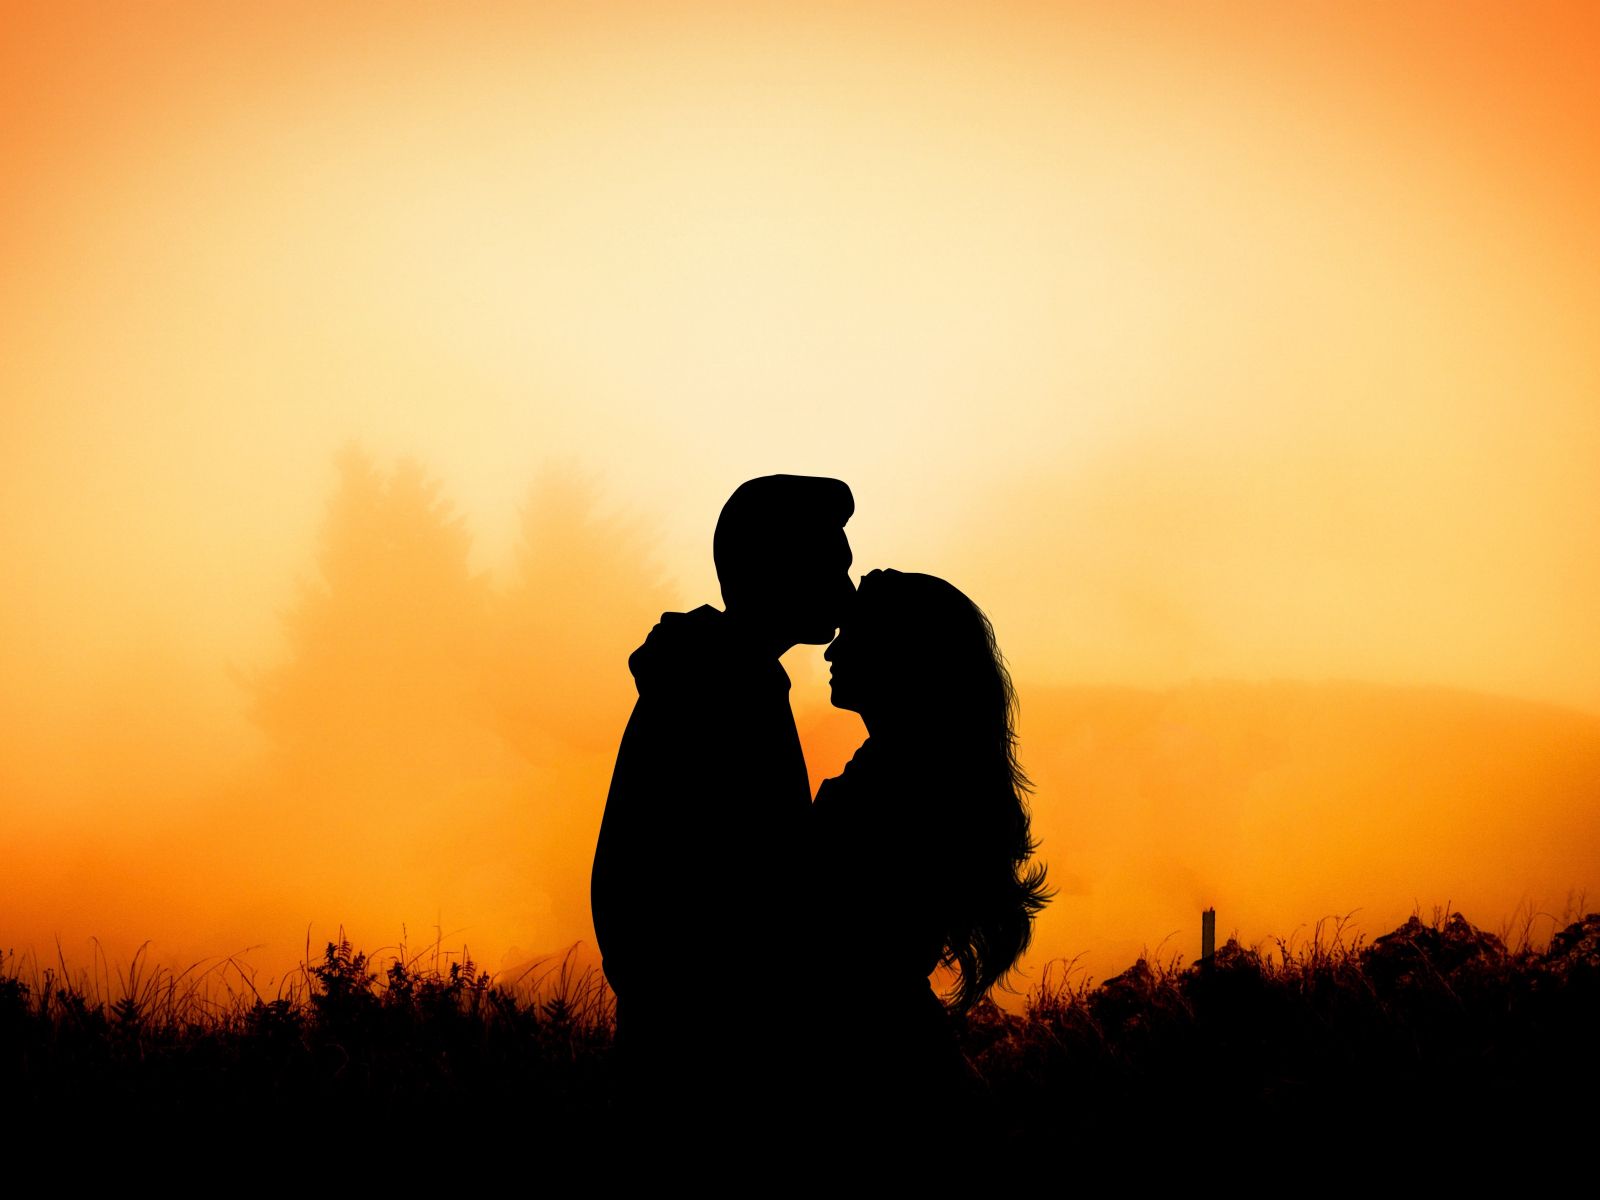 Download 1600x1200 wallpaper couple, hug, kiss, love, outdoor, sunset, standard 4: fullscreen, 1600x1200 HD image, background, 2974